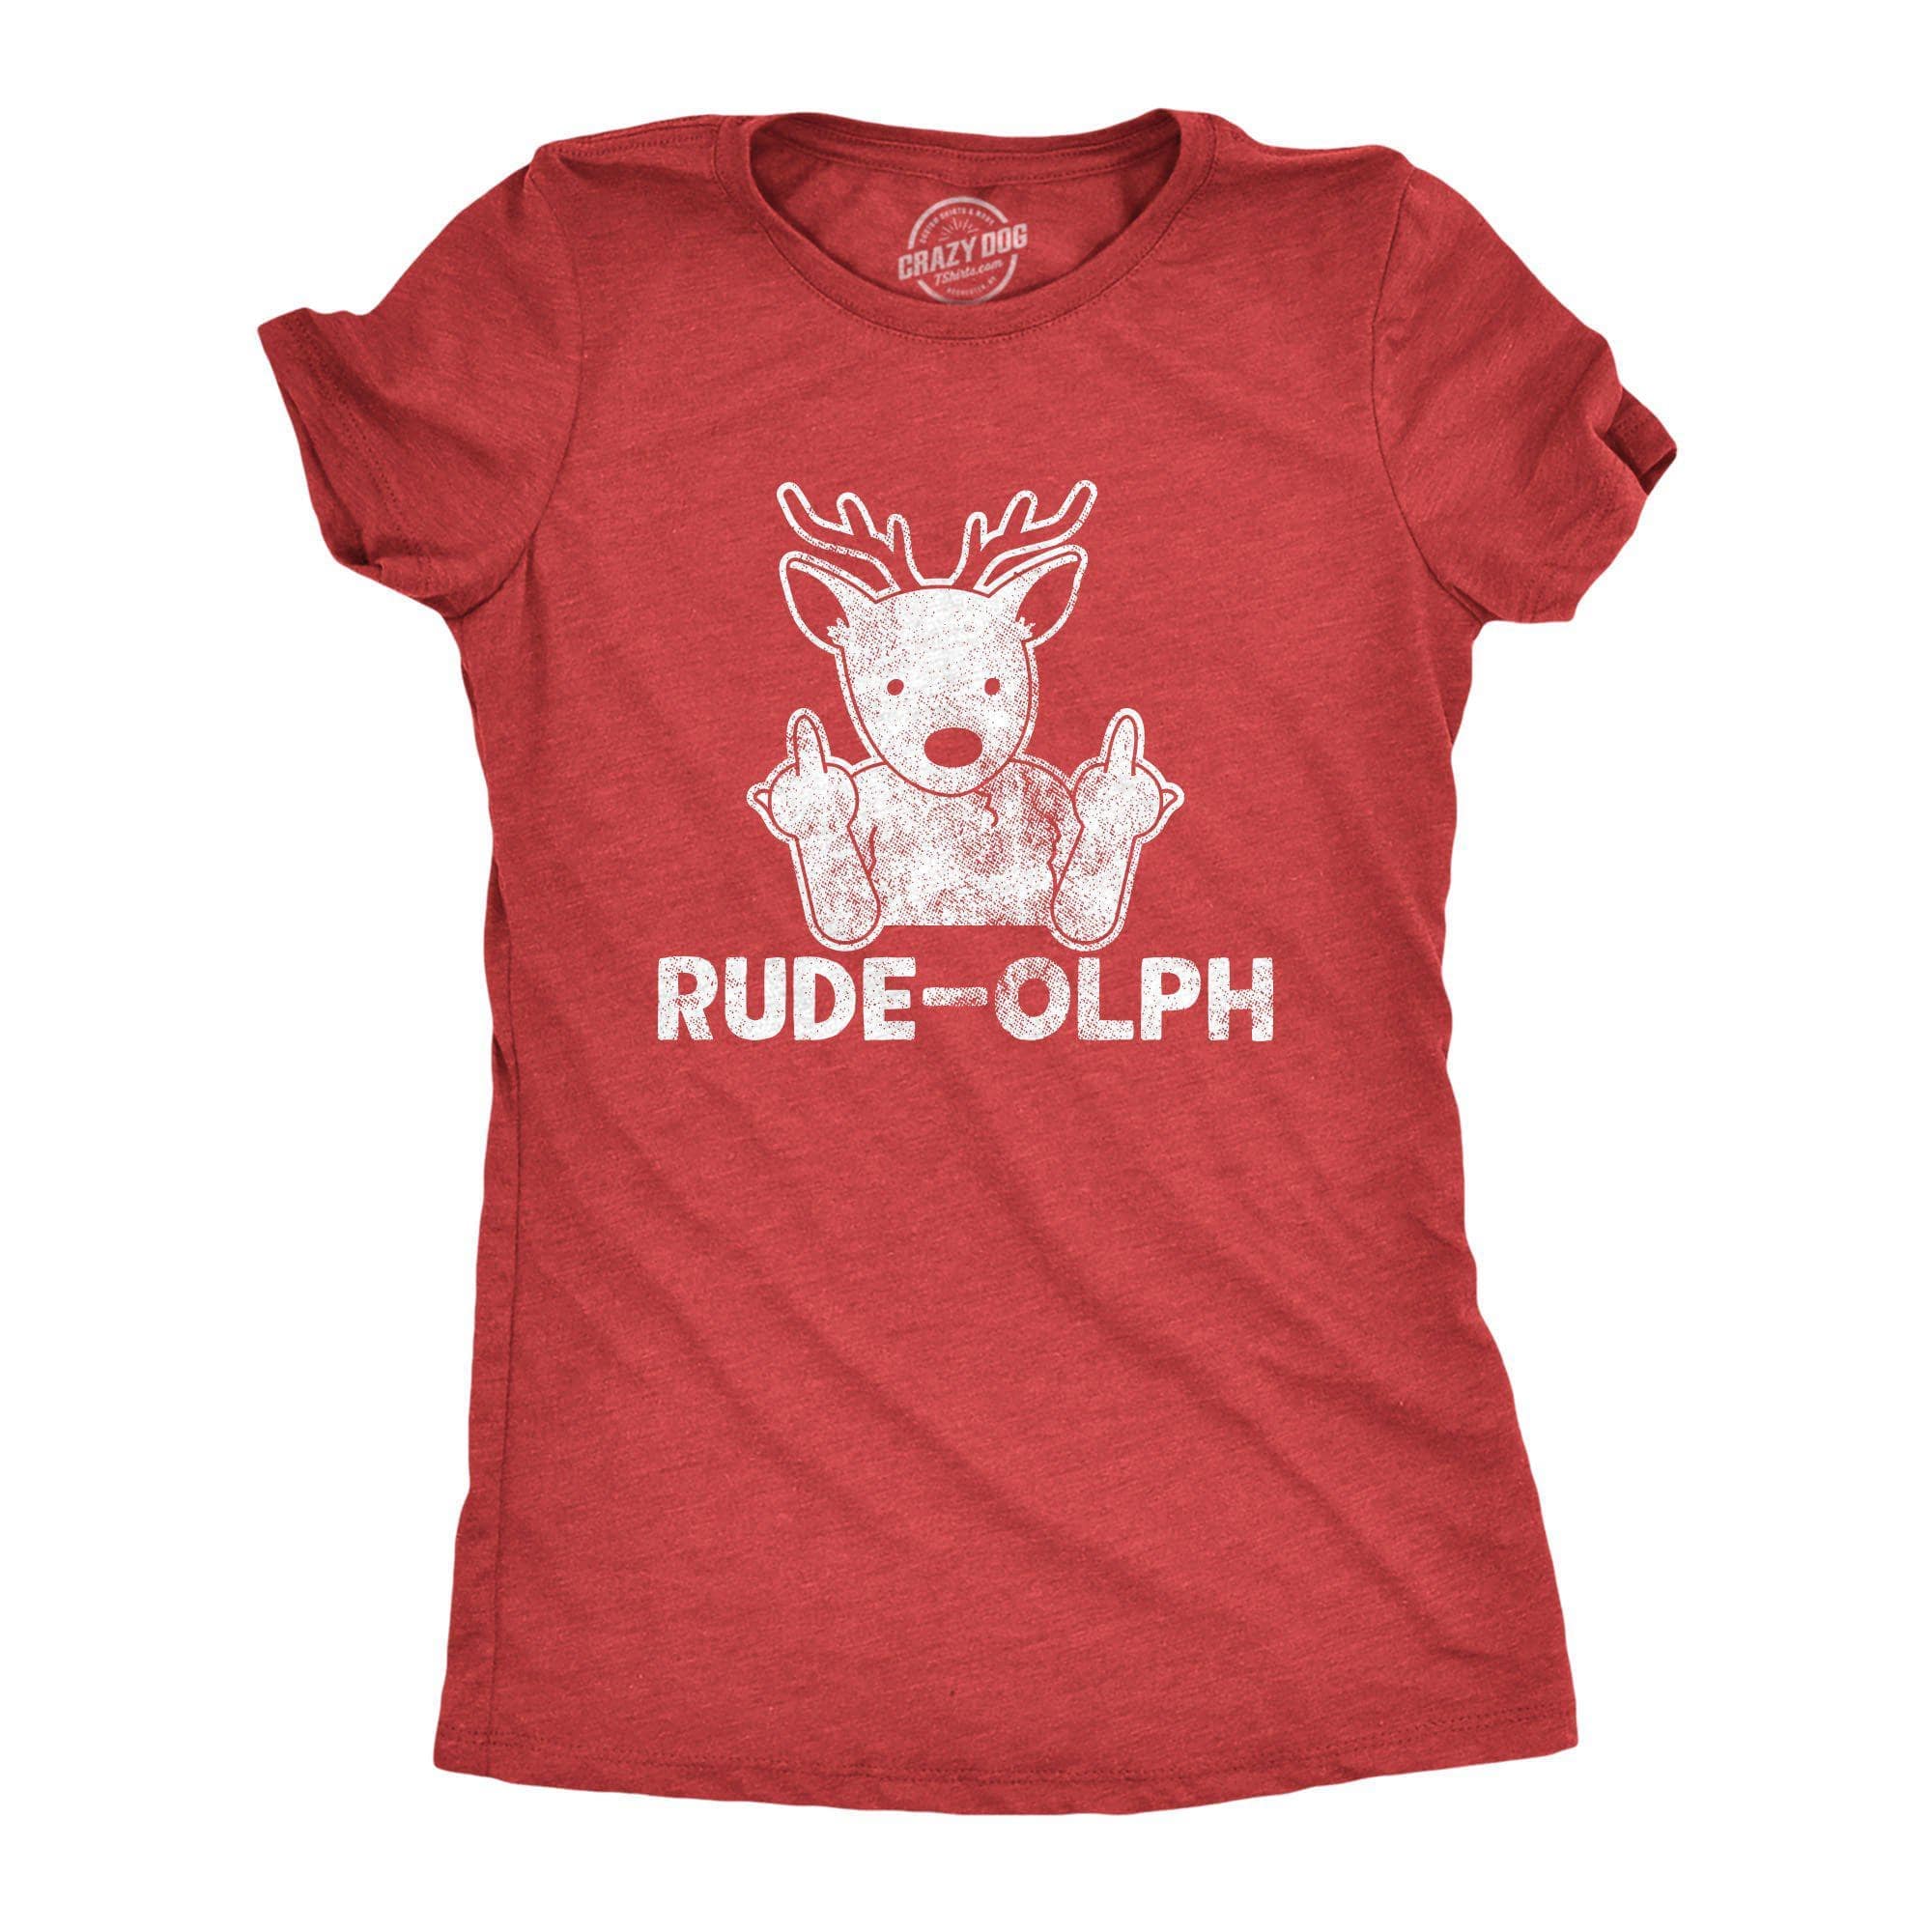 Rude-olph Women's Tshirt - Crazy Dog T-Shirts